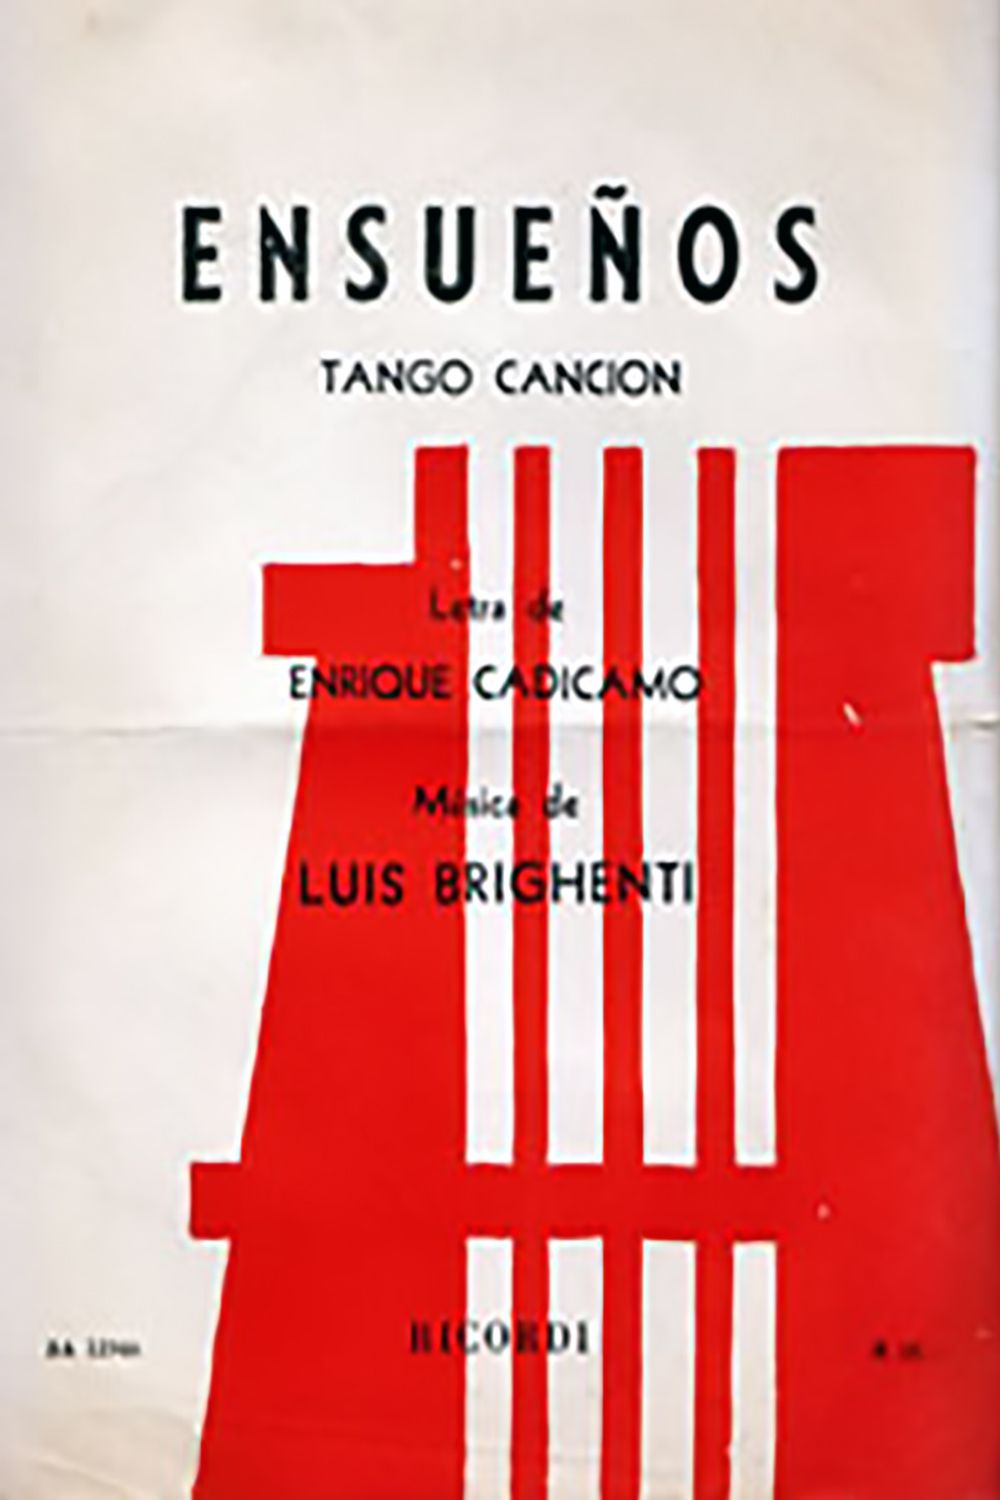 'Ensueños', Argentine Tango music sheet cover.